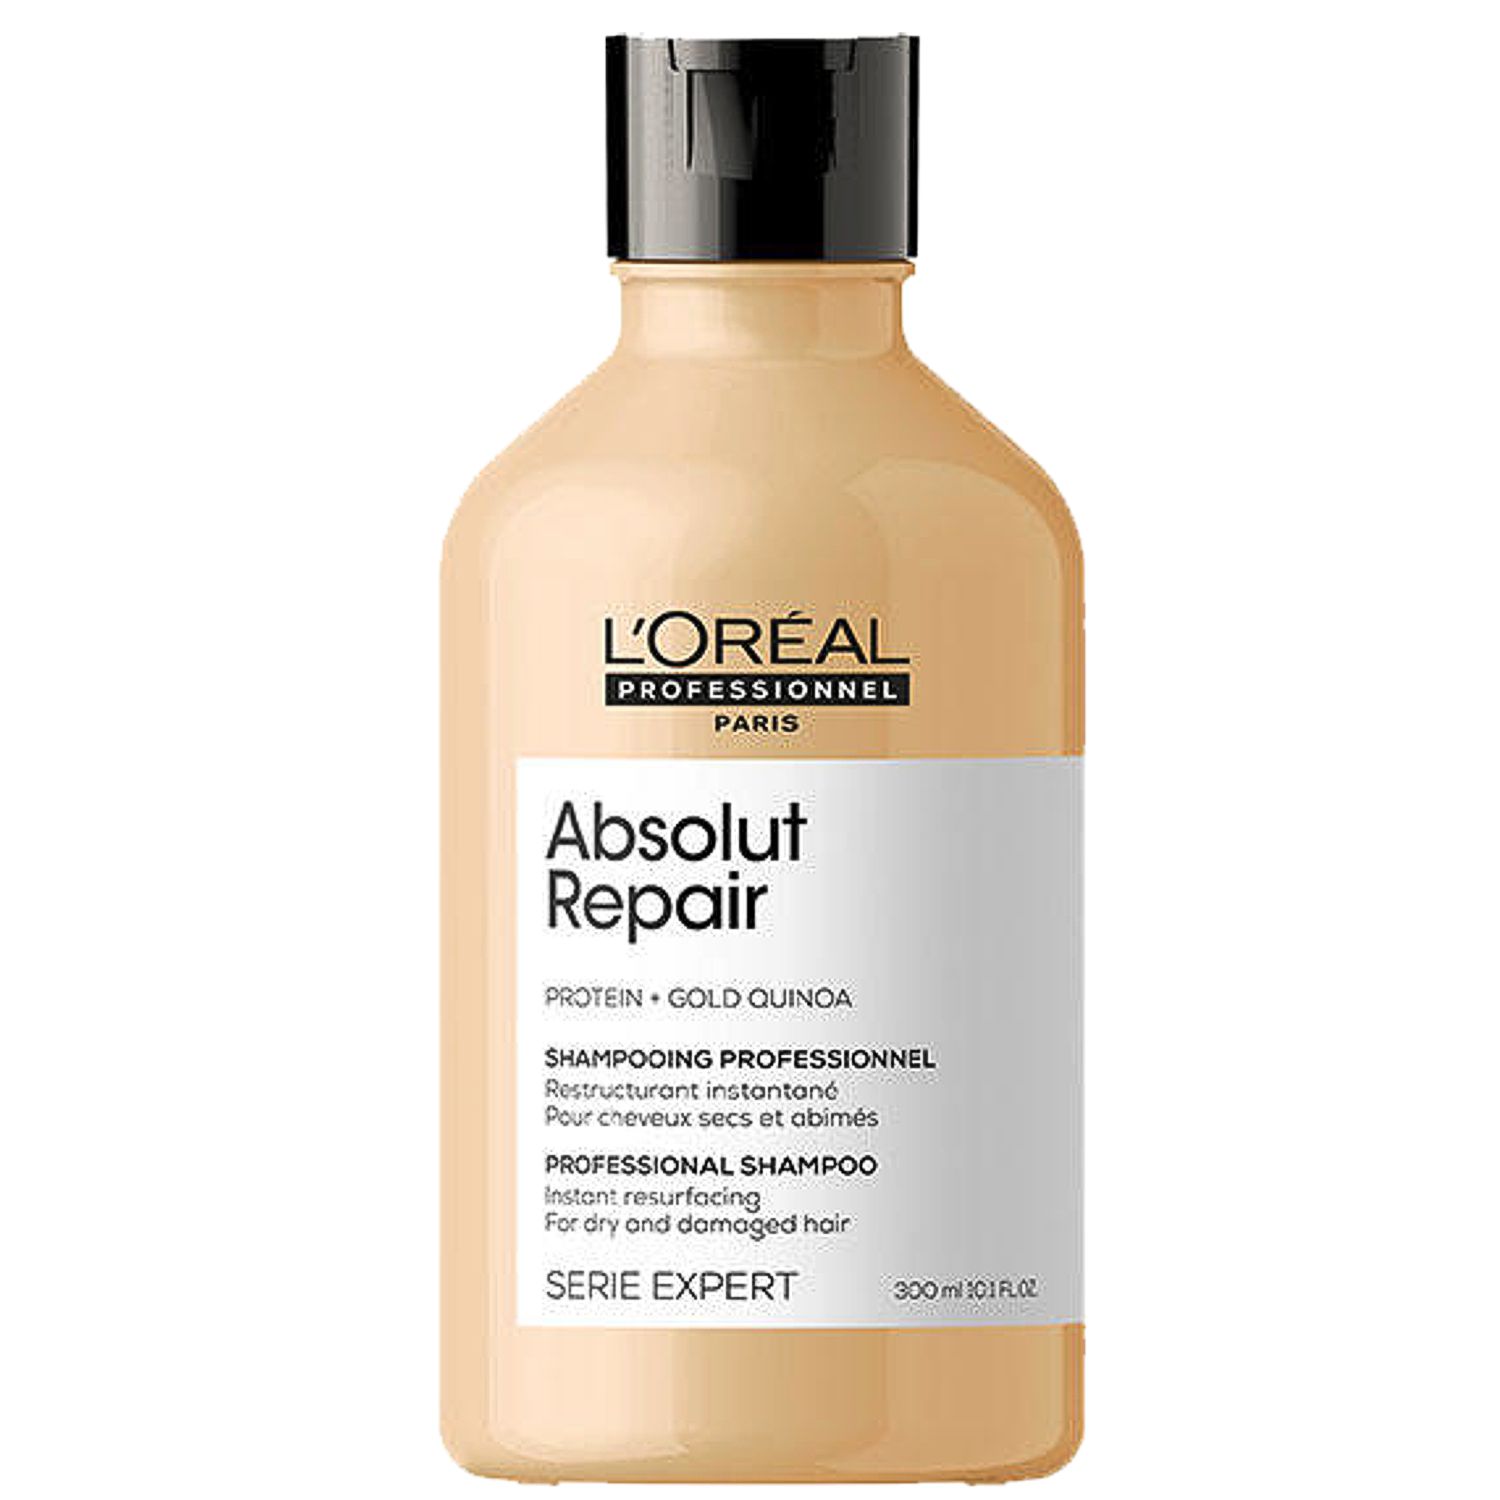 L'ORÉAL Expert ABSOLUT REPAIR Professional Shampoo 300 ml